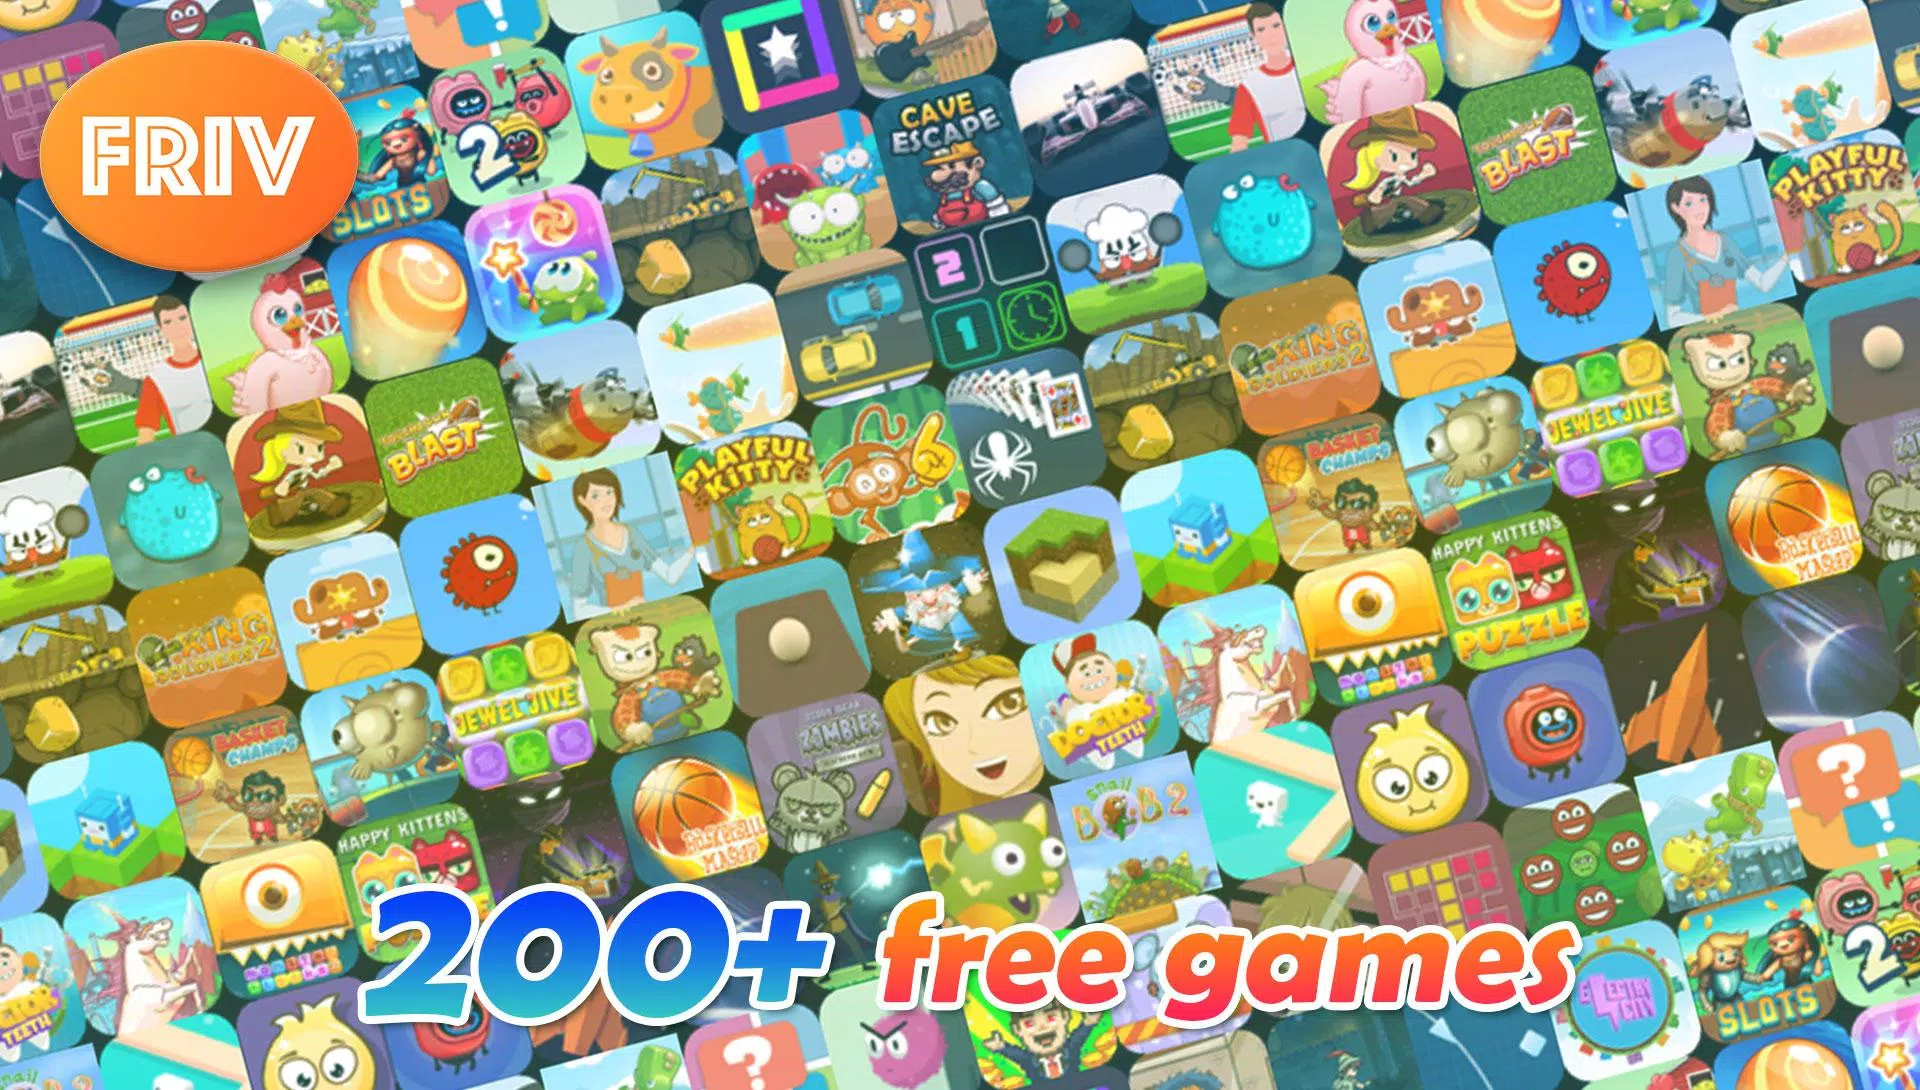 Hago- Festa, Conversa, Jogos – Apps no Google Play